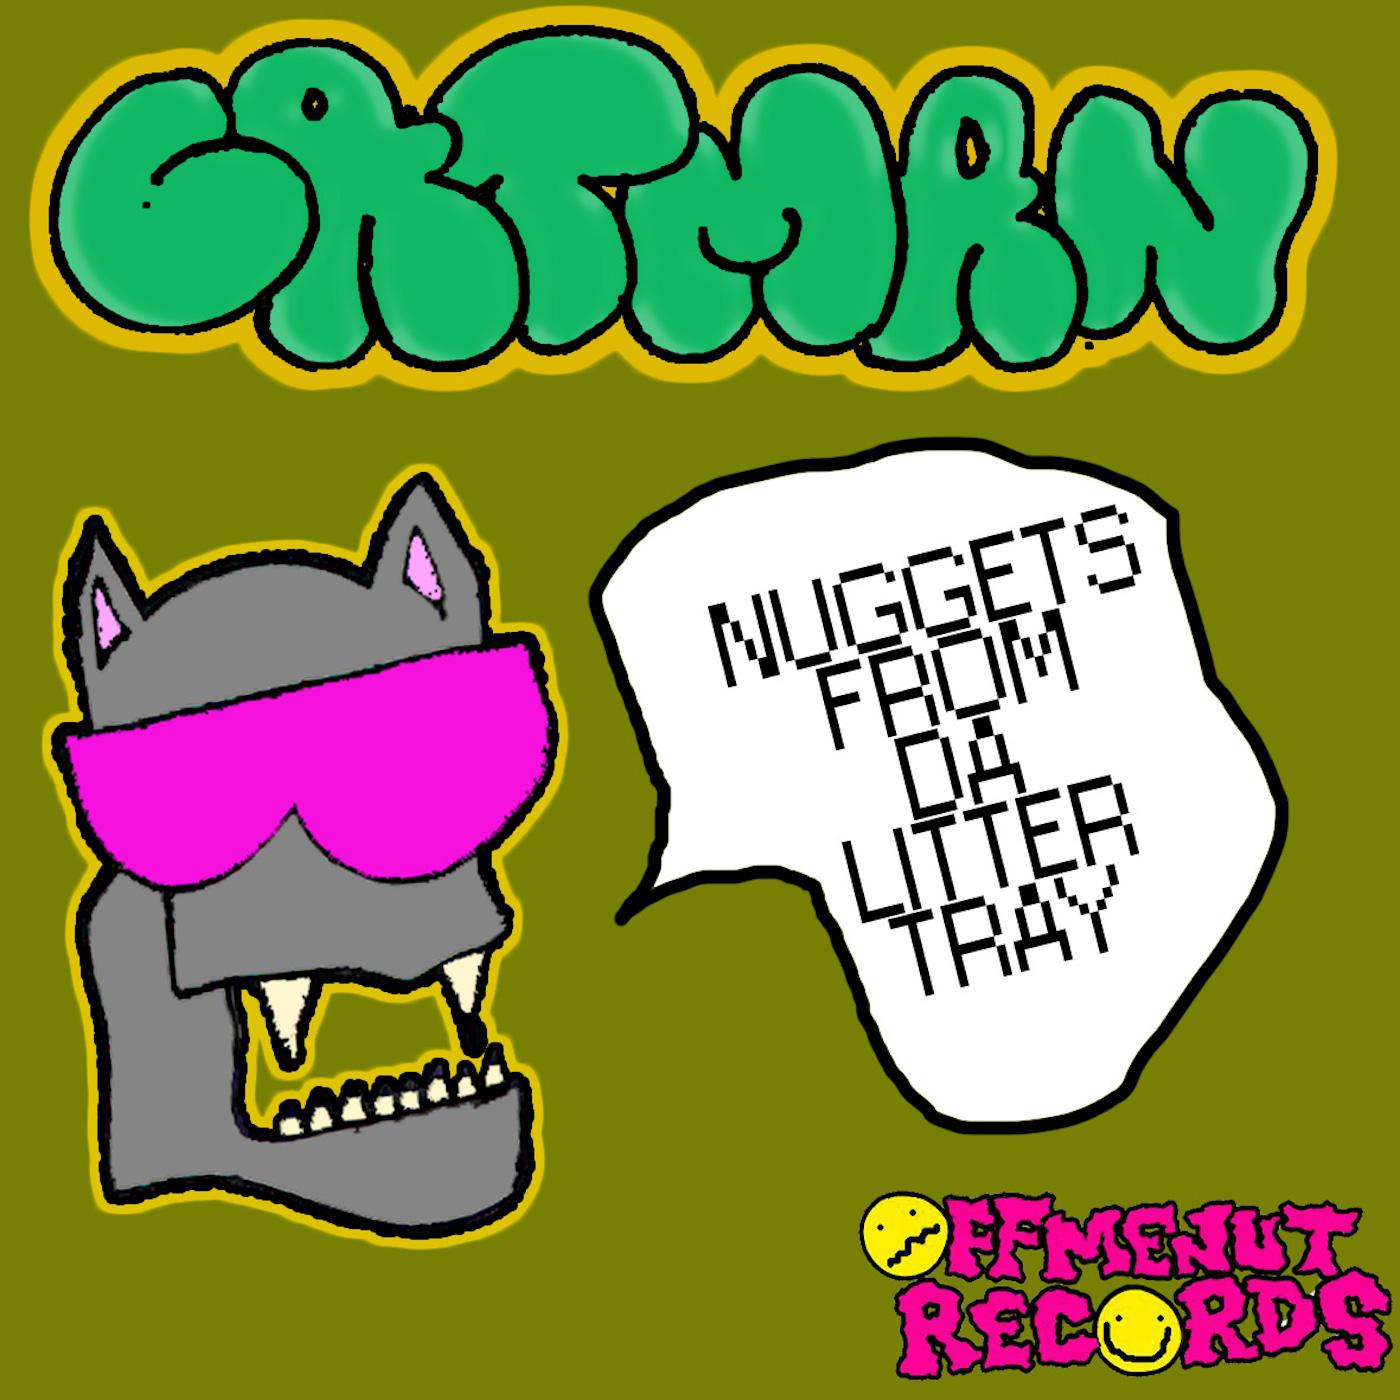 Catman - Chuddy (Original Mix)